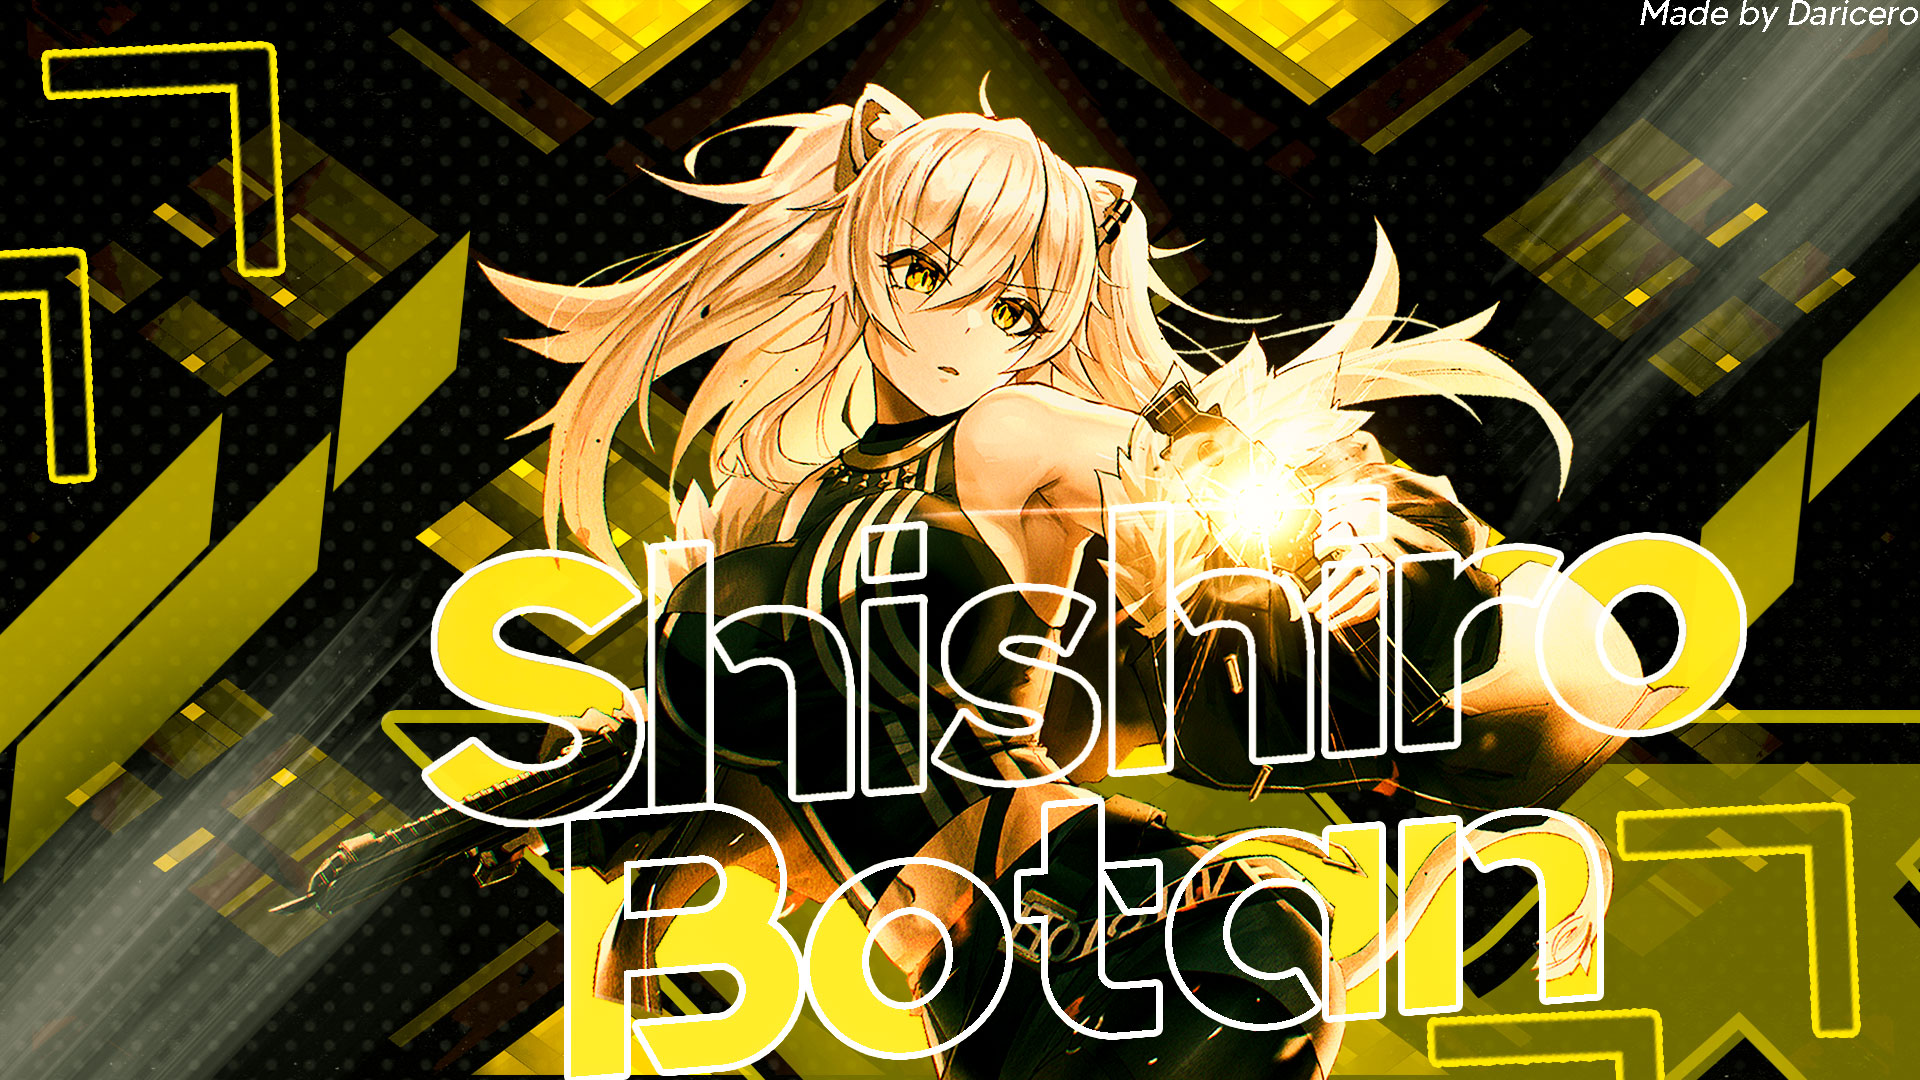 Anime Girls Shishiro Botan Hololive Yellow Eyes Shapes Dynamic White Hair 1920x1080